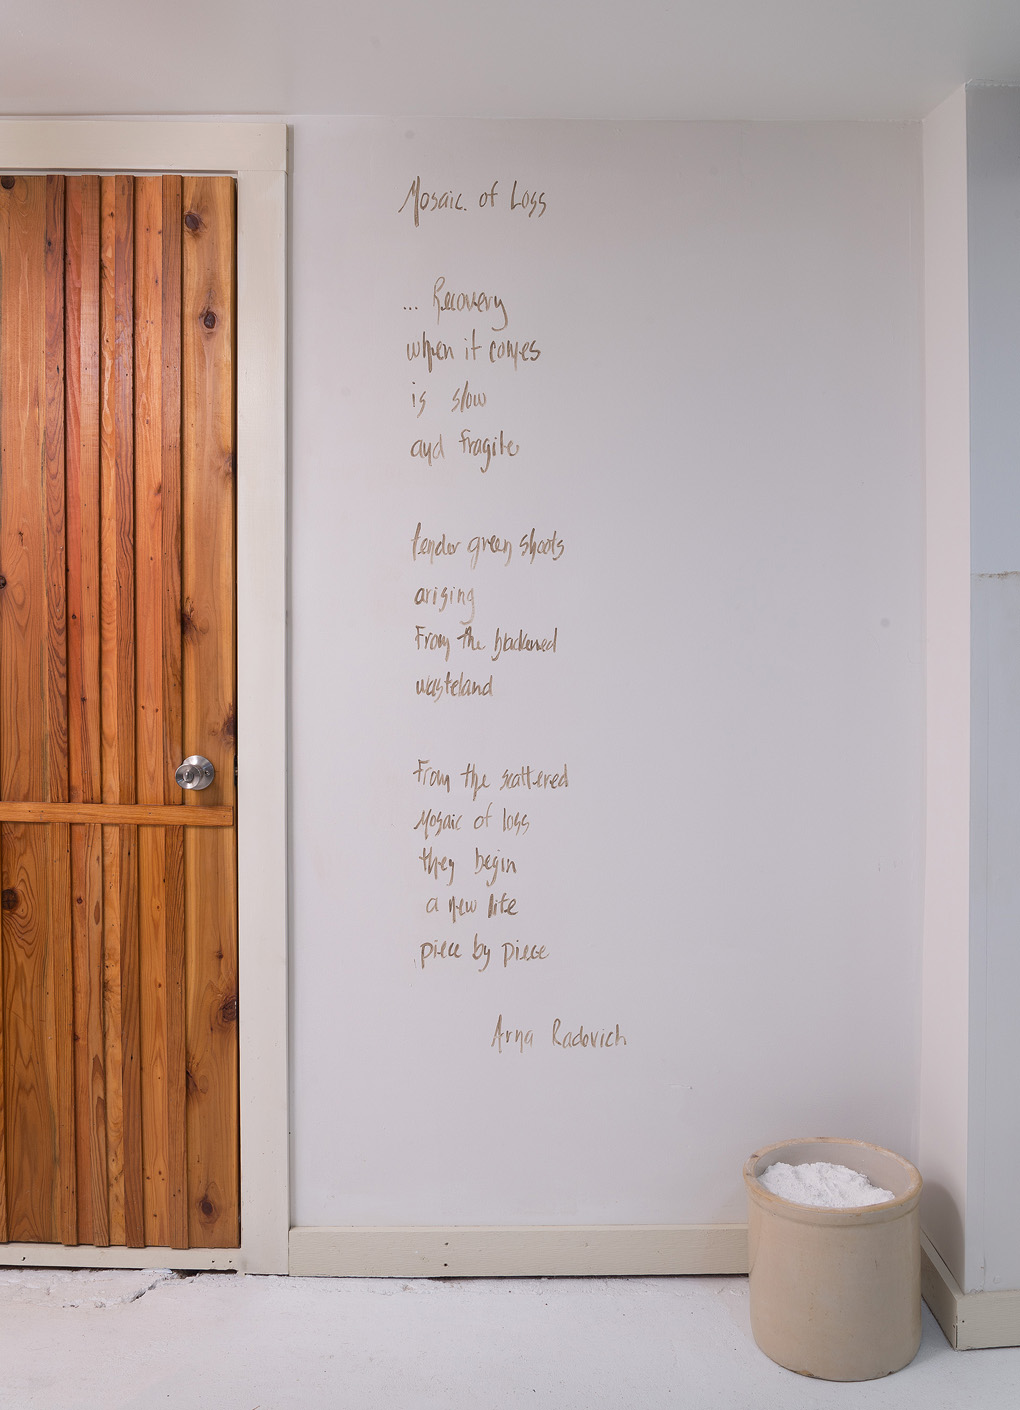  Installation detail of Arna Radovich poem written in Kansas mud. 